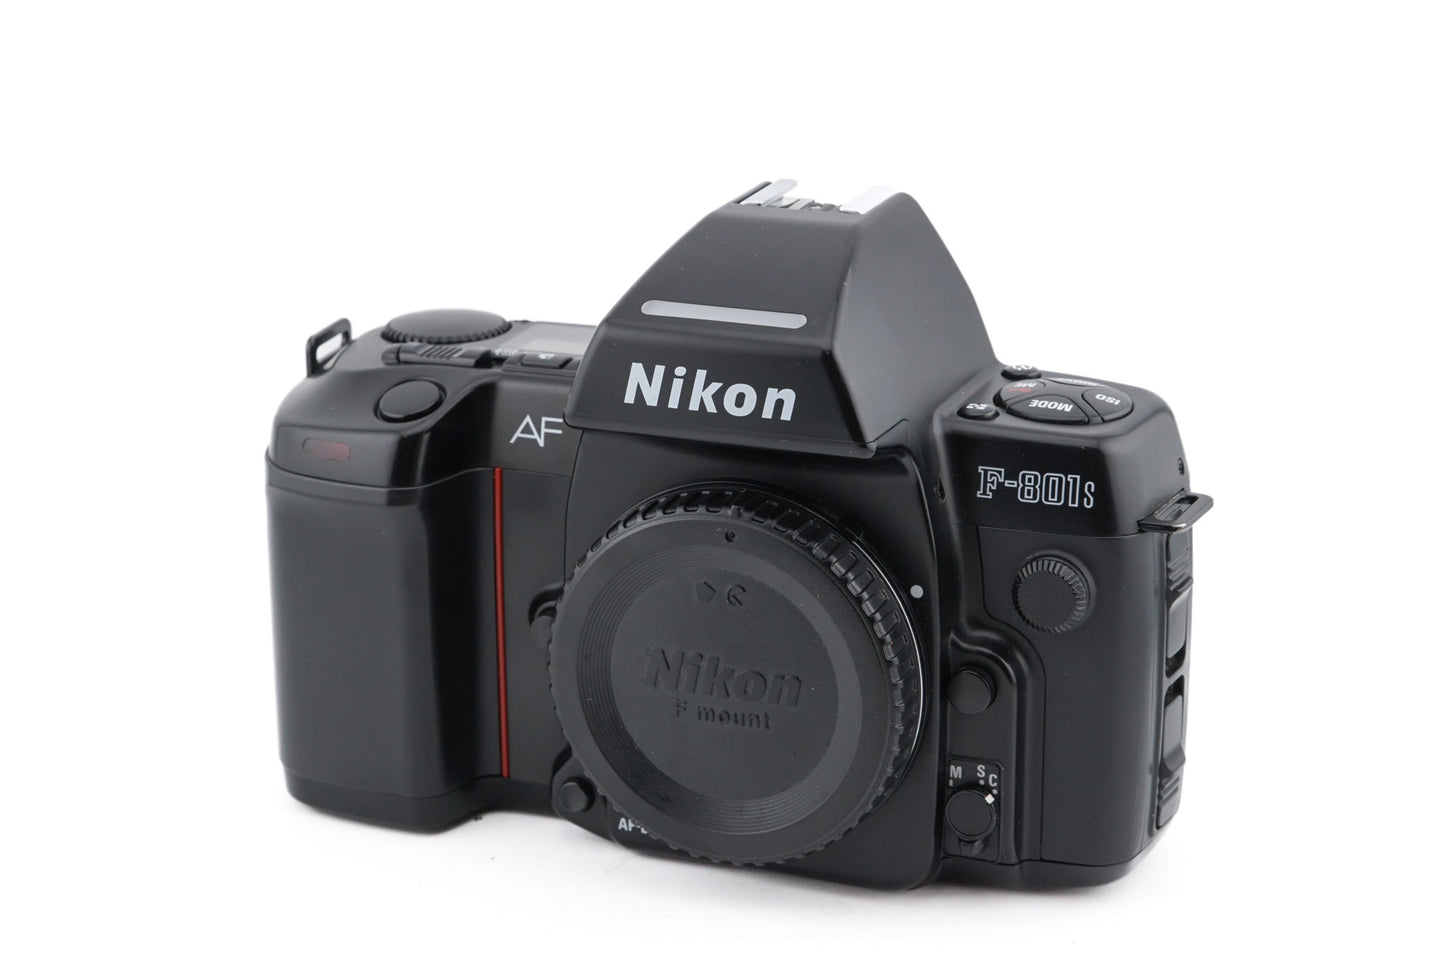 Nikon F-801s - Camera